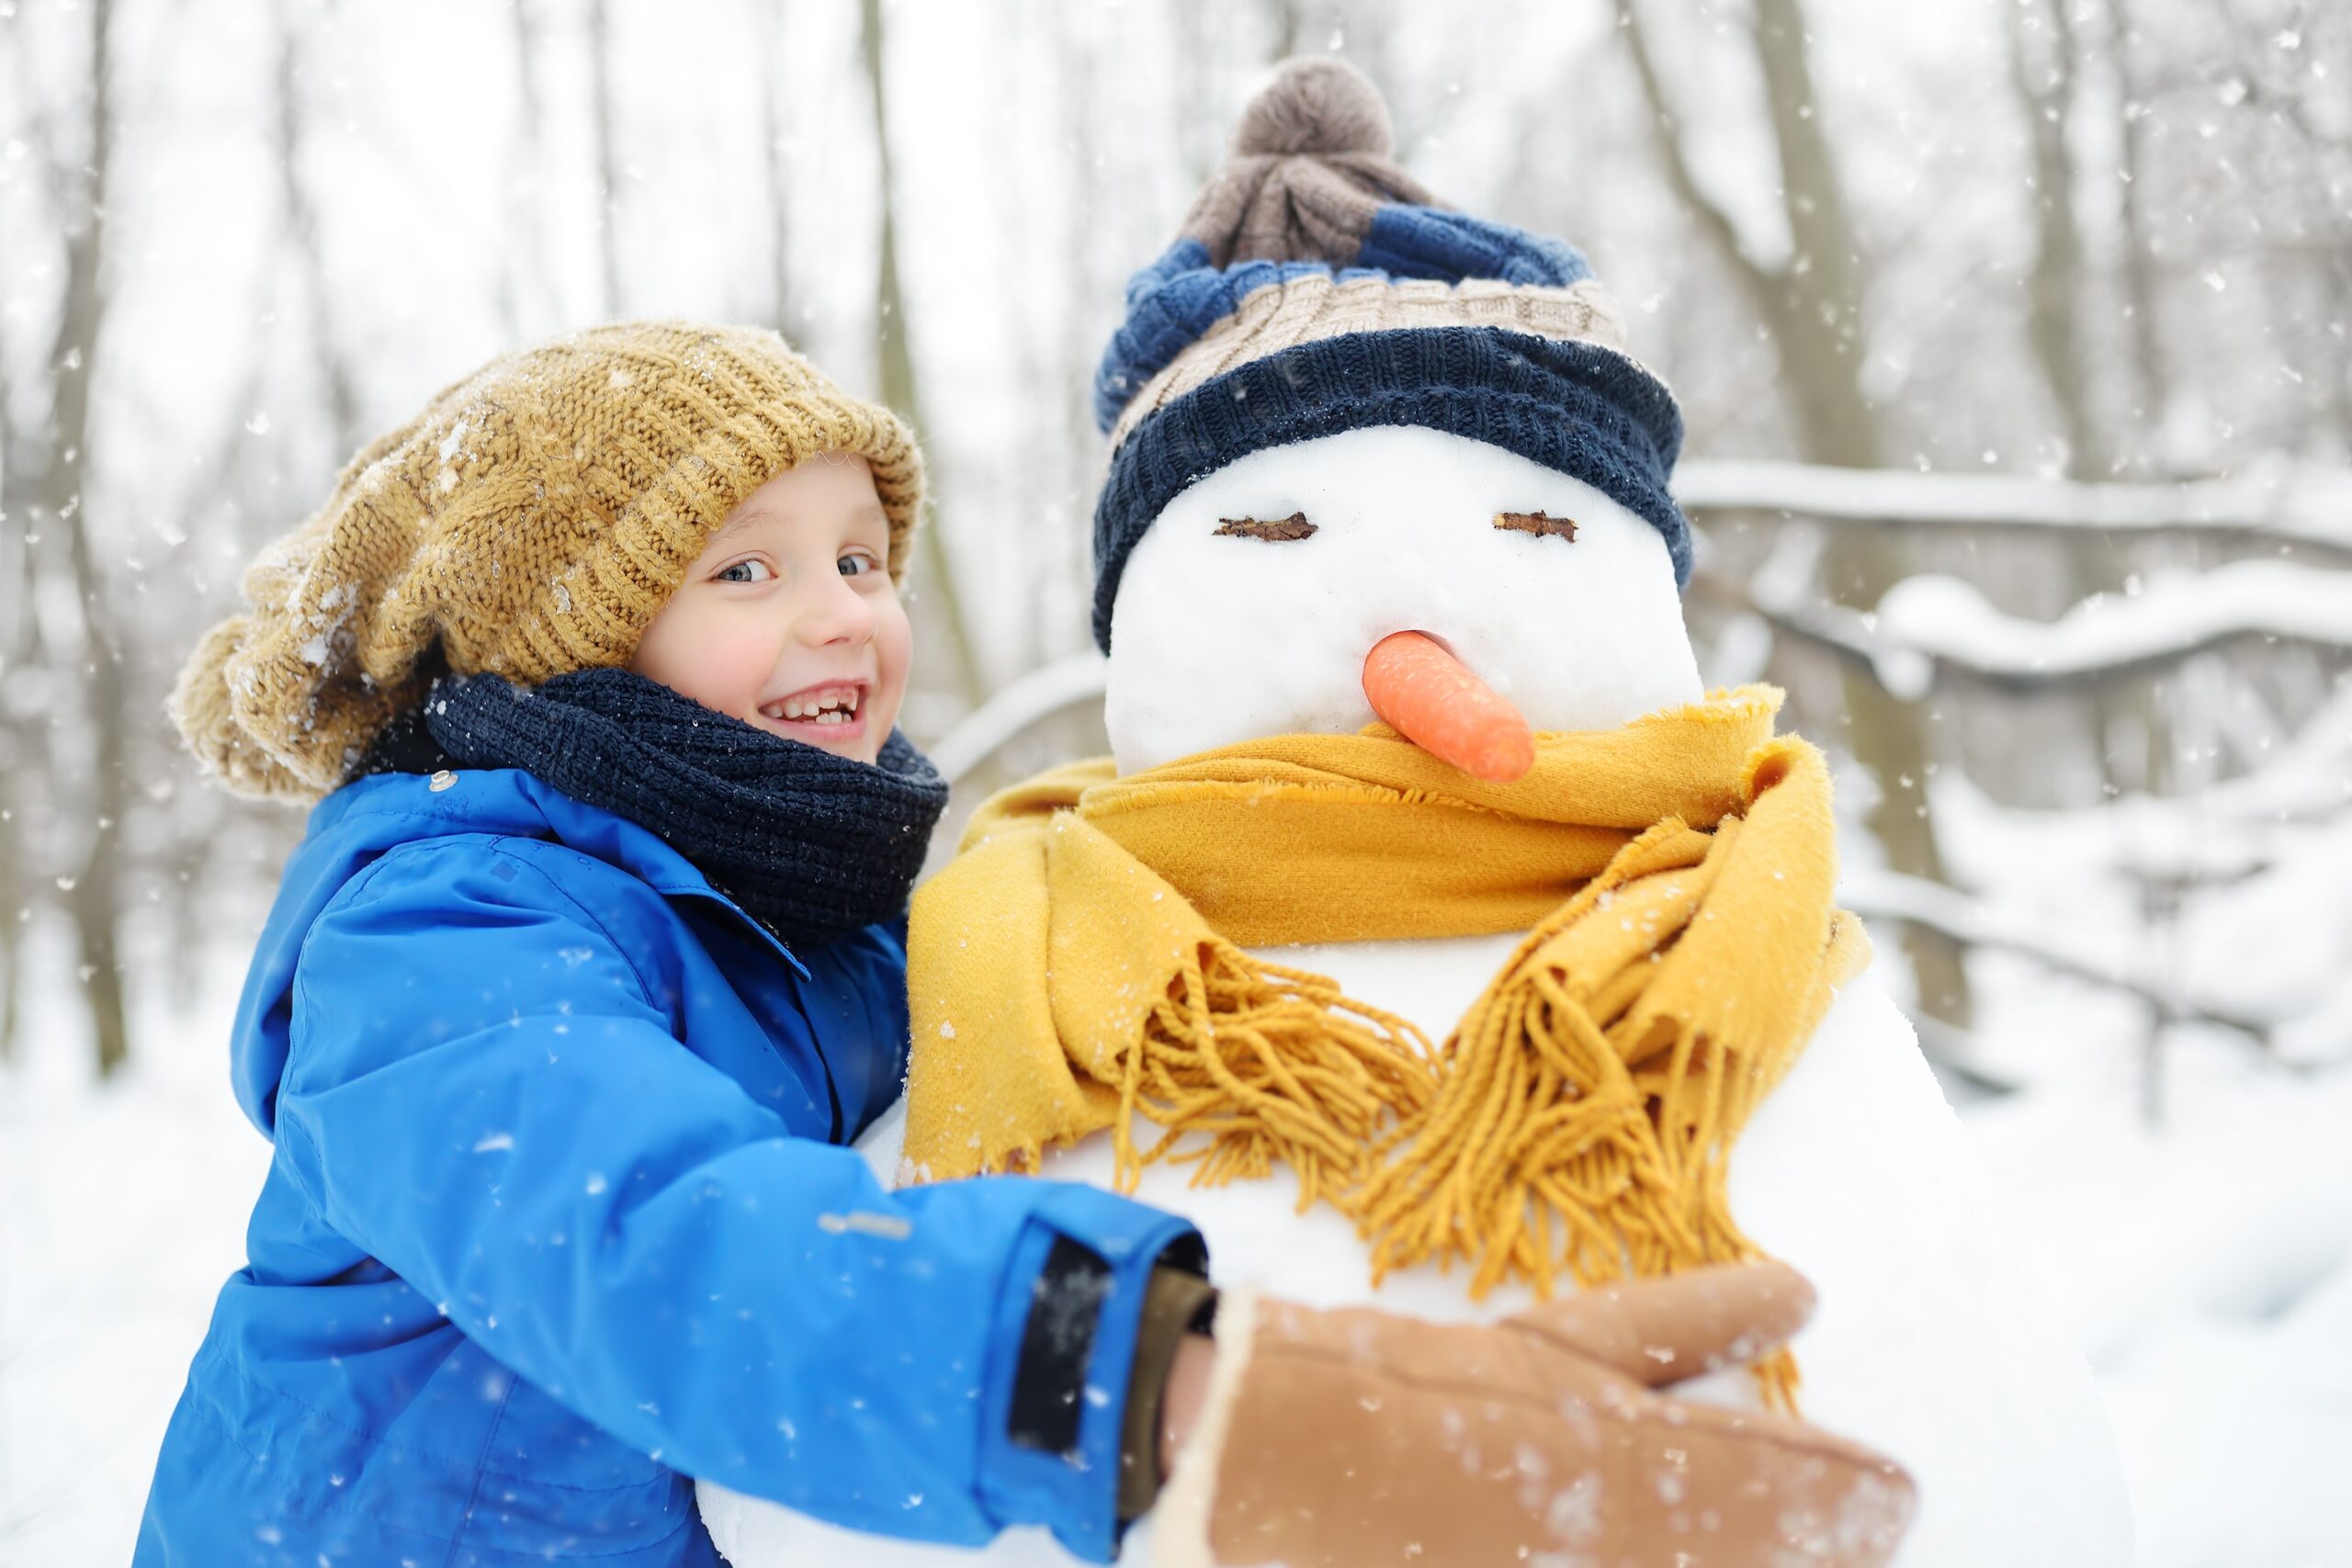 Little,Boy,Building,Snowman,In,Snowy,Park.,Child,Embracing,Snowman